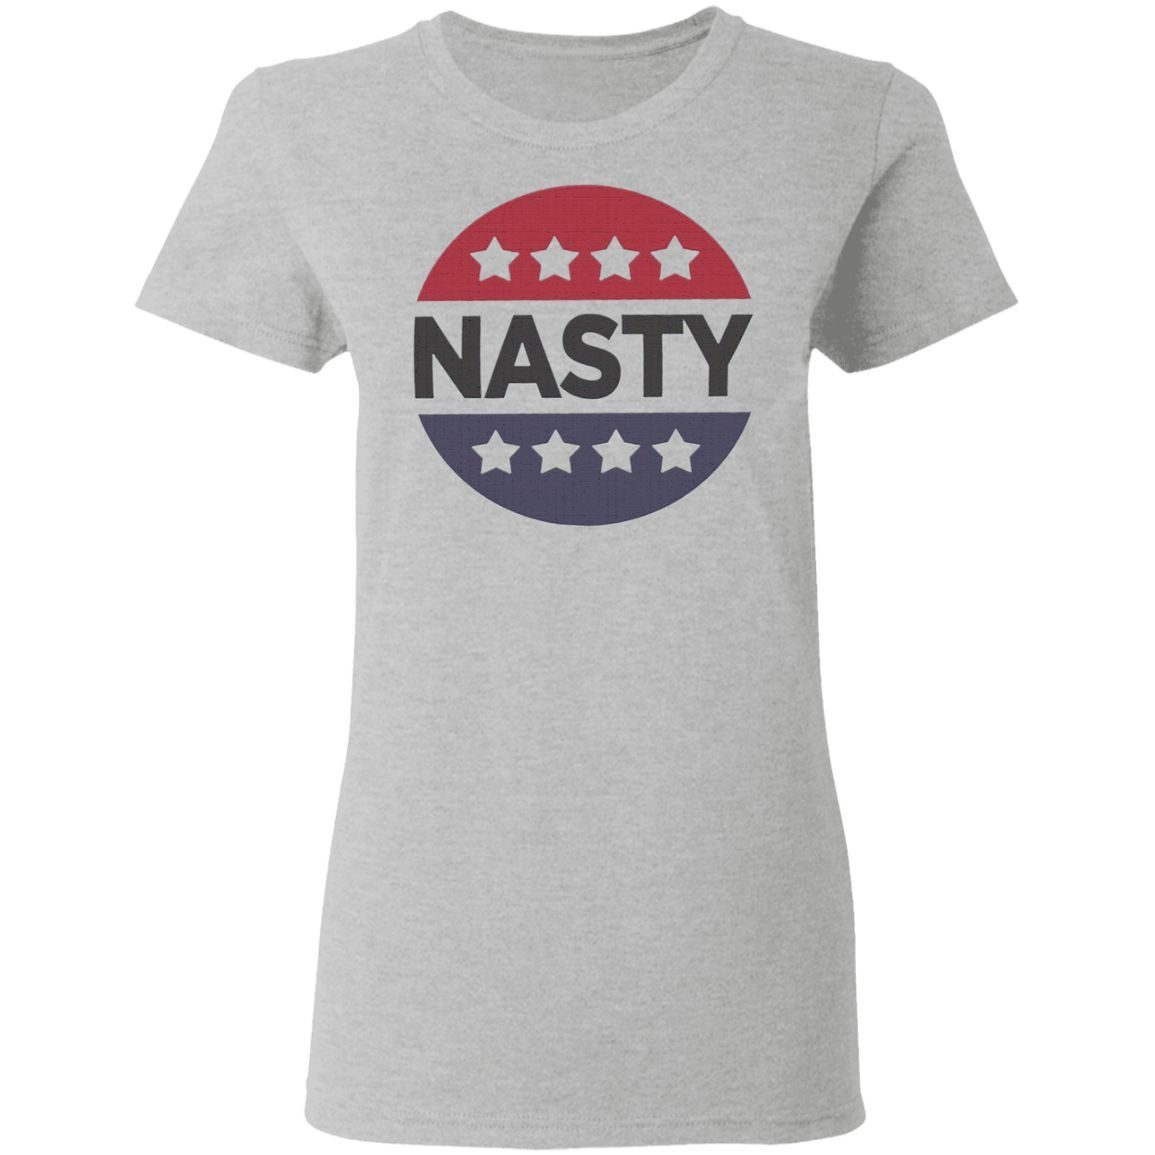 Biden Harris 2020 Shirt, Nasty T Shirt, Nasty Woman Shirt, Biden Harris Tee, Women’s Rights Shirt, Kamala Harris Shirt, Nasty Tee